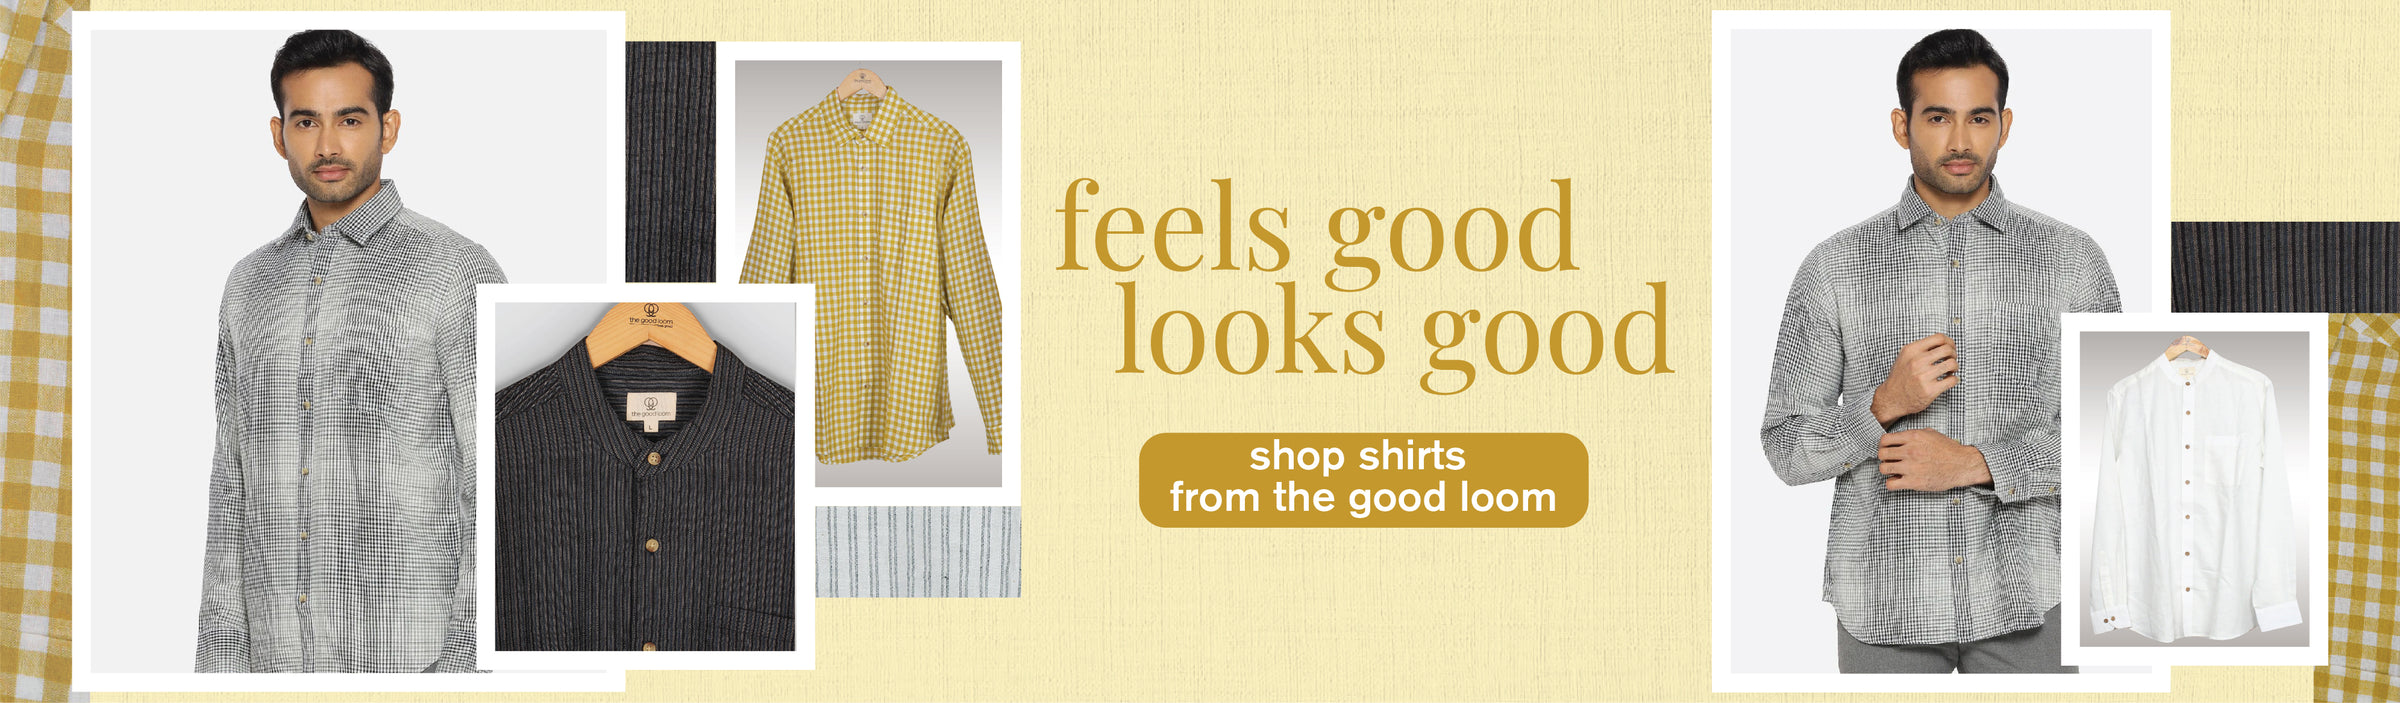 the good loom - mens wear